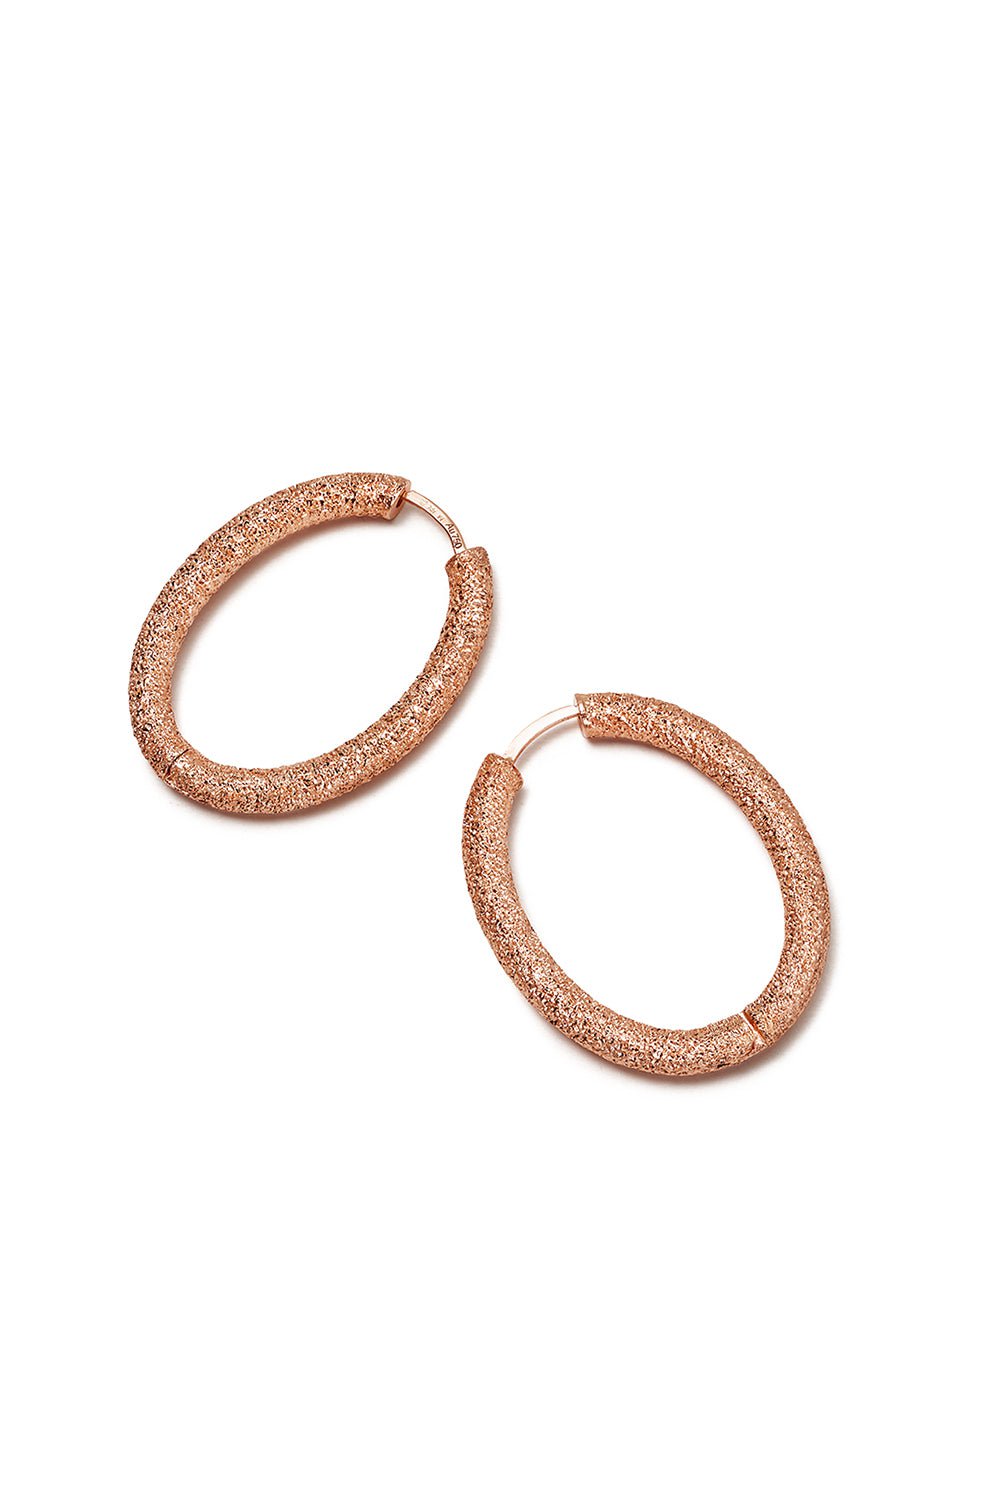 CAROLINA BUCCI-Florentine Finish Small Oval Hoop Earrings-ROSE GOLD